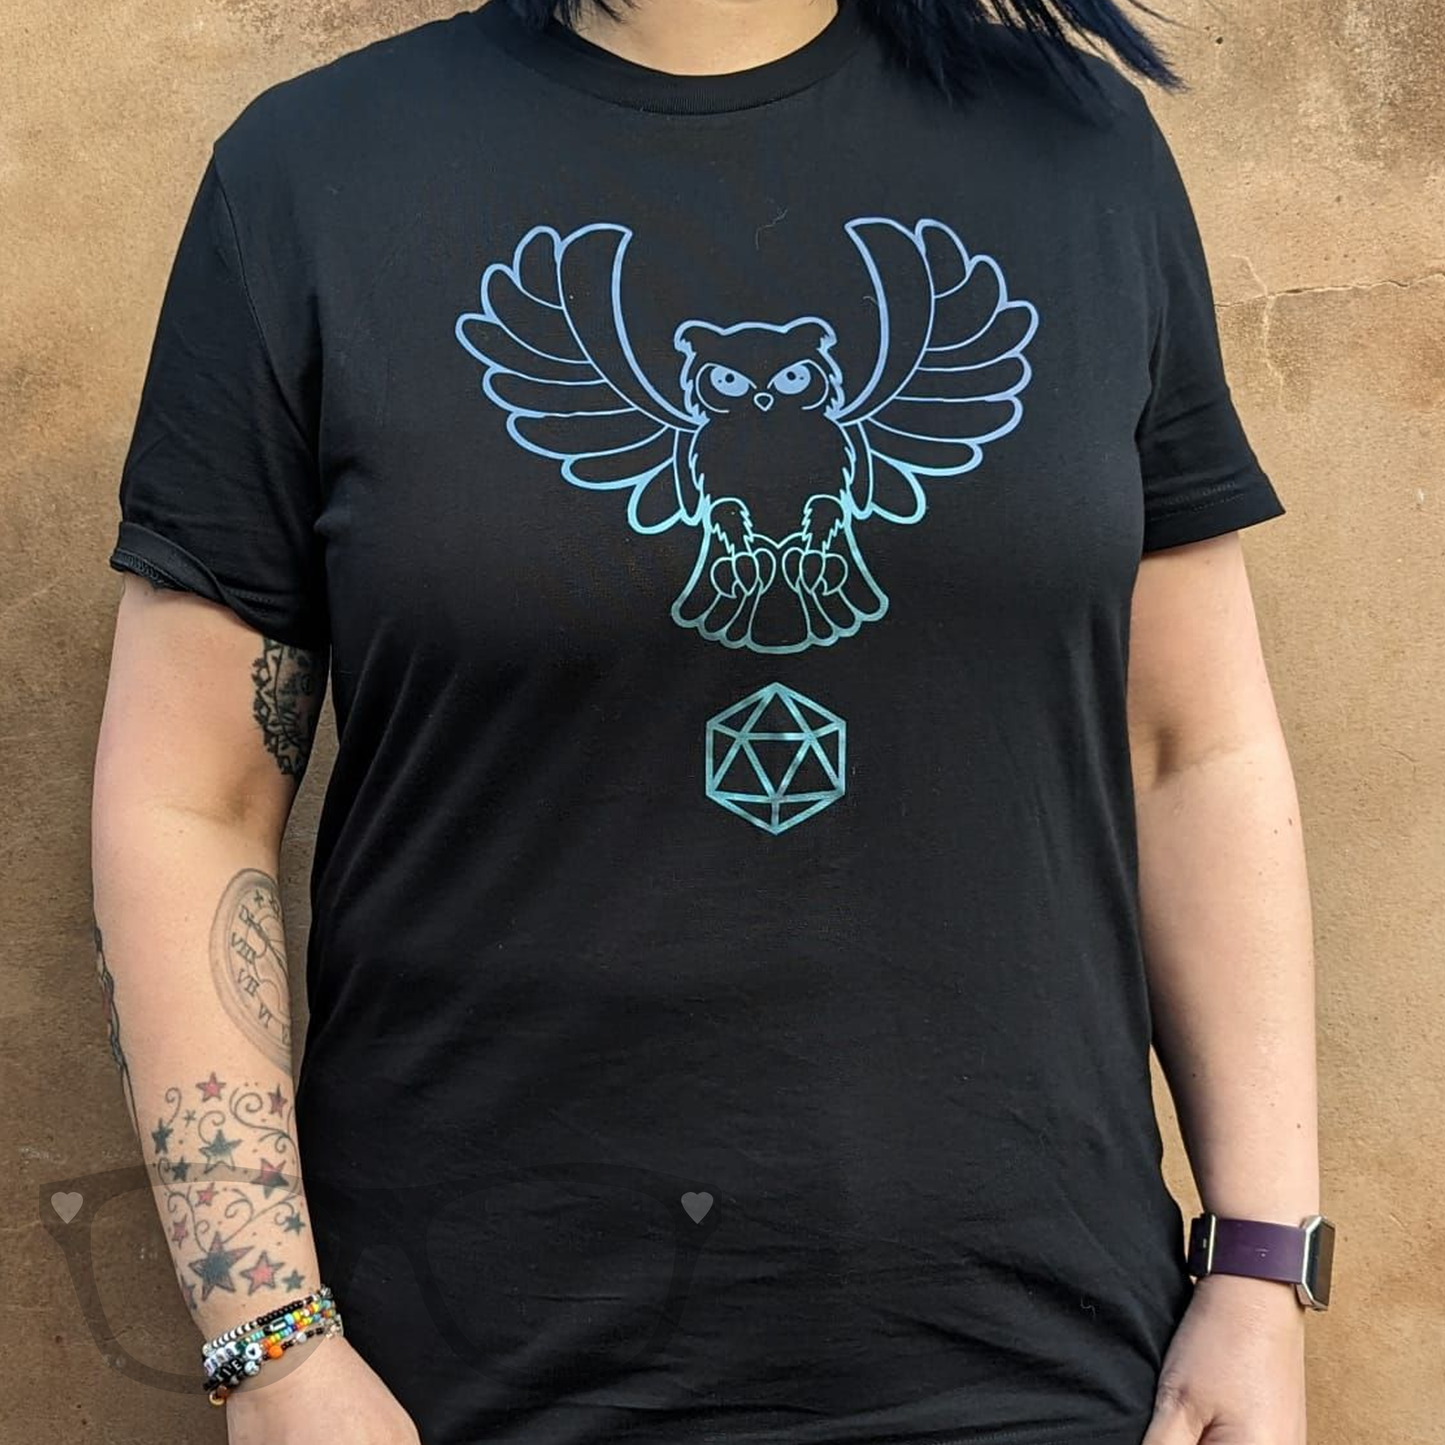 Owl wisdom t-shirt on black organic cotton t-shirt being worn